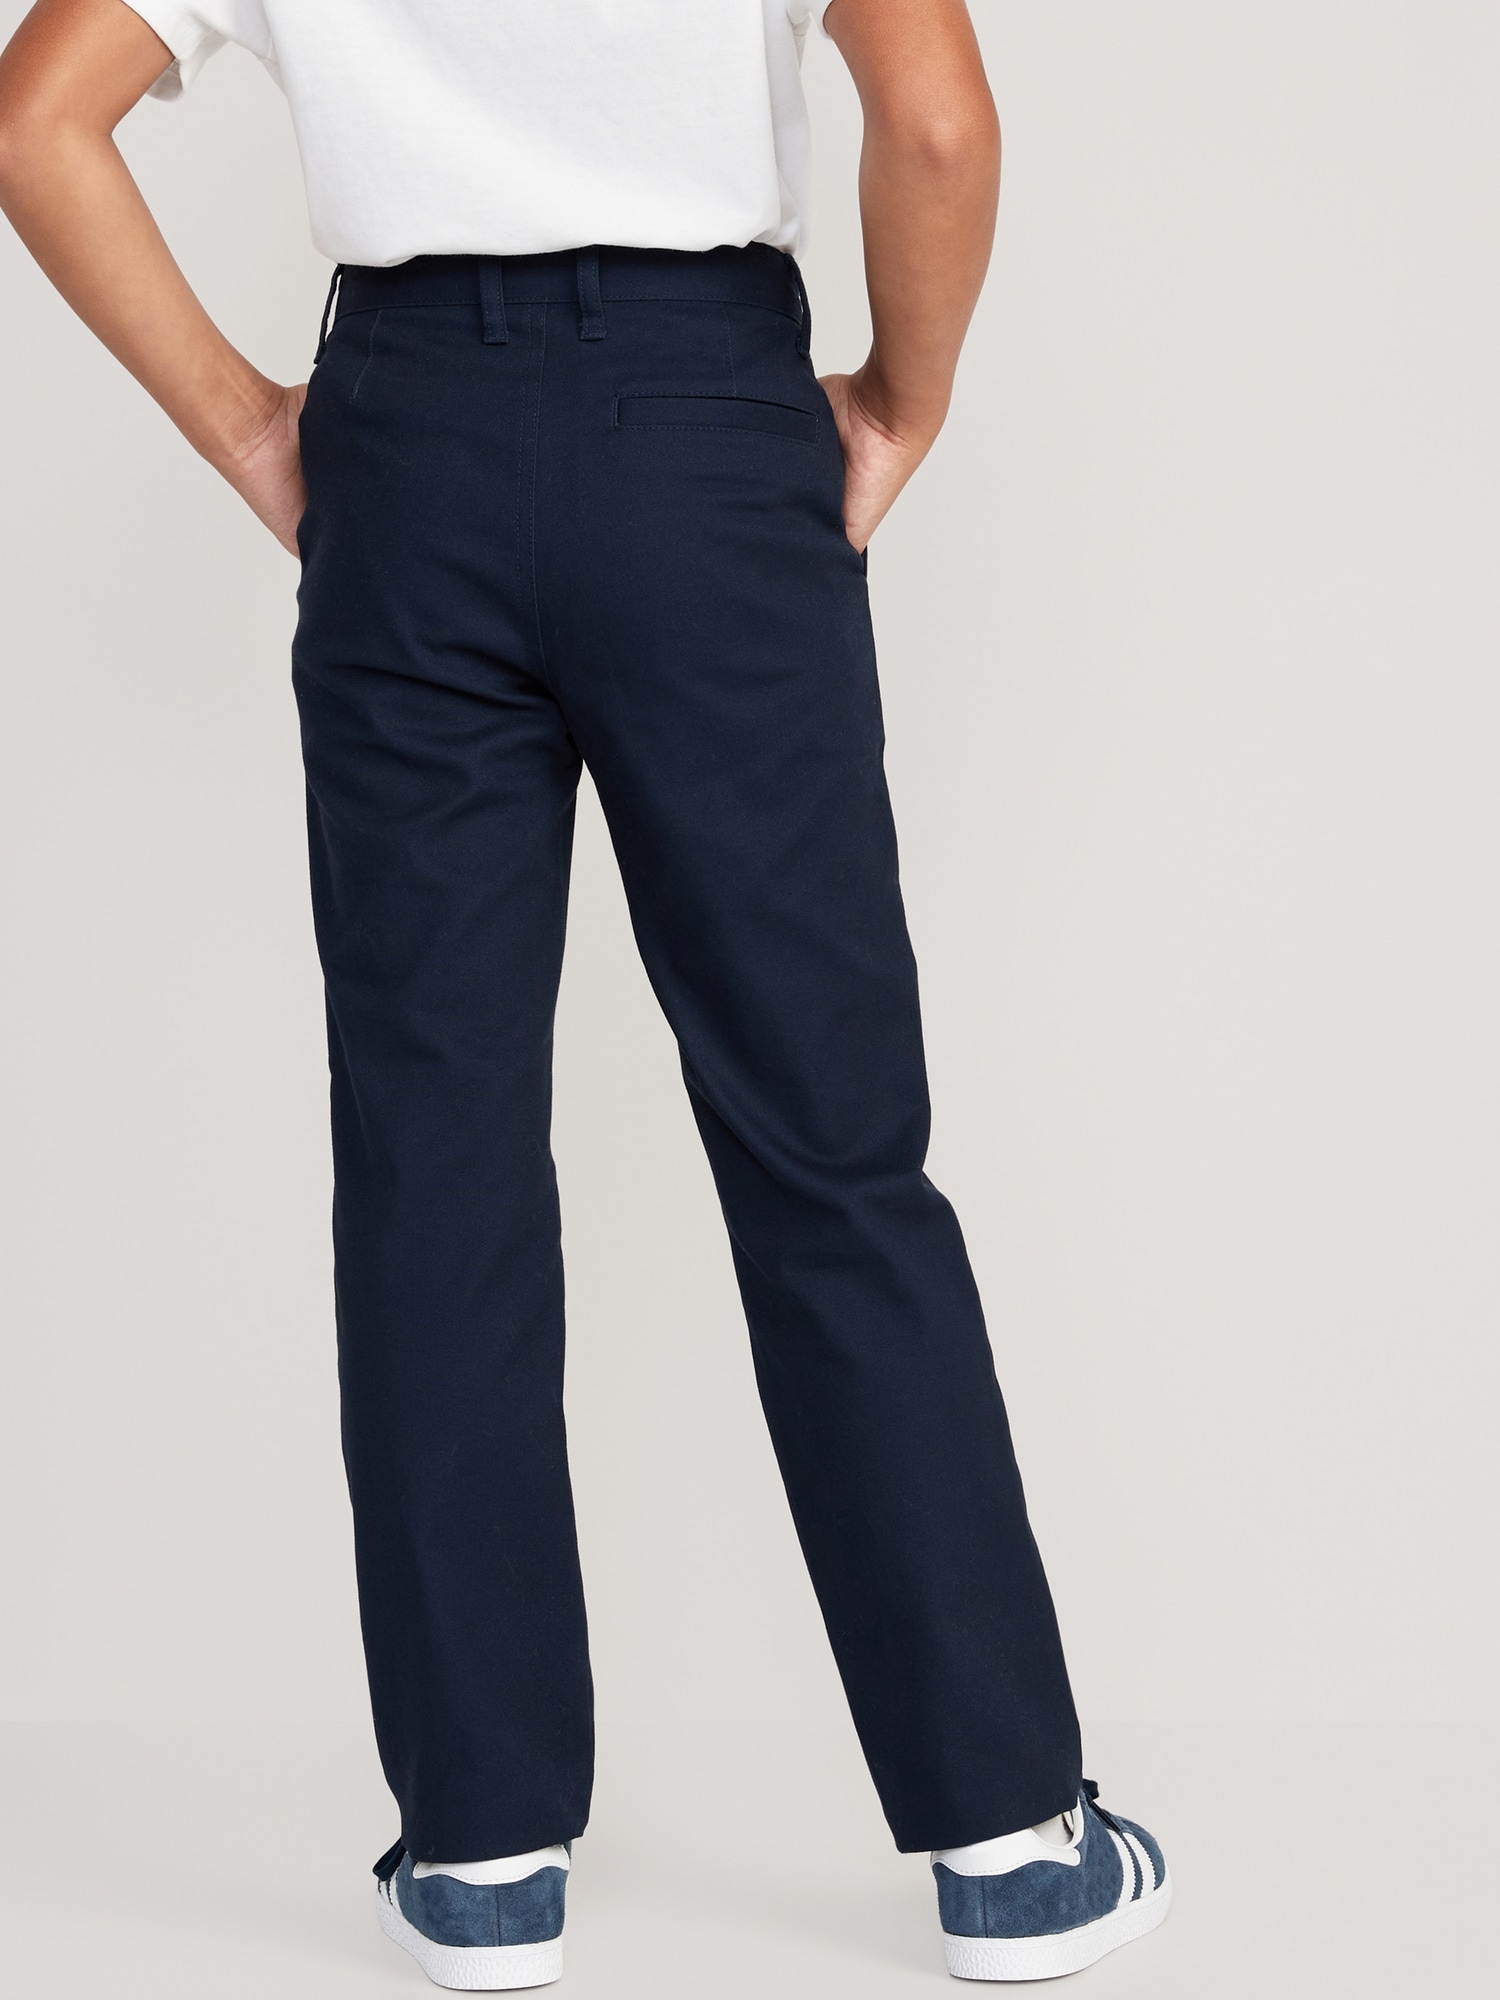 Navyblue pants paha school uniform for adult | Lazada PH